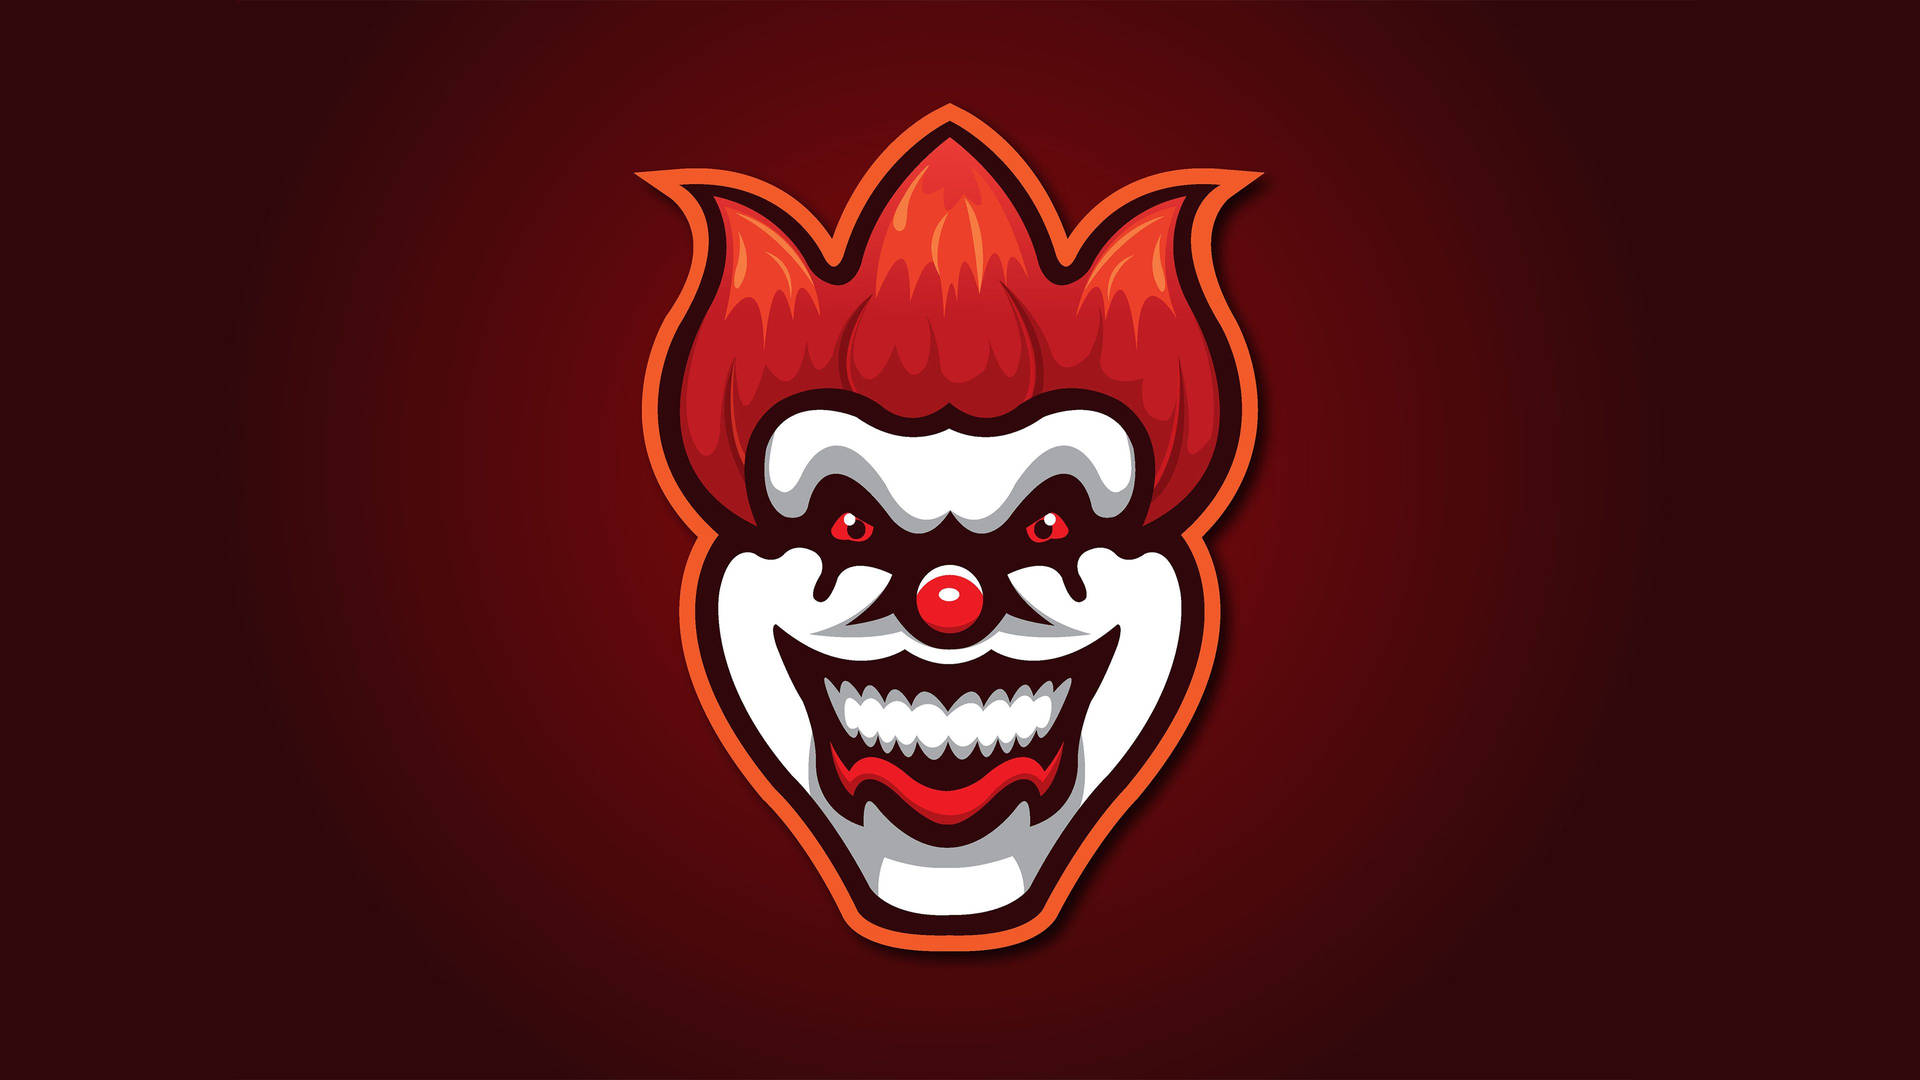 Smiling Clown Logo Wallpaper